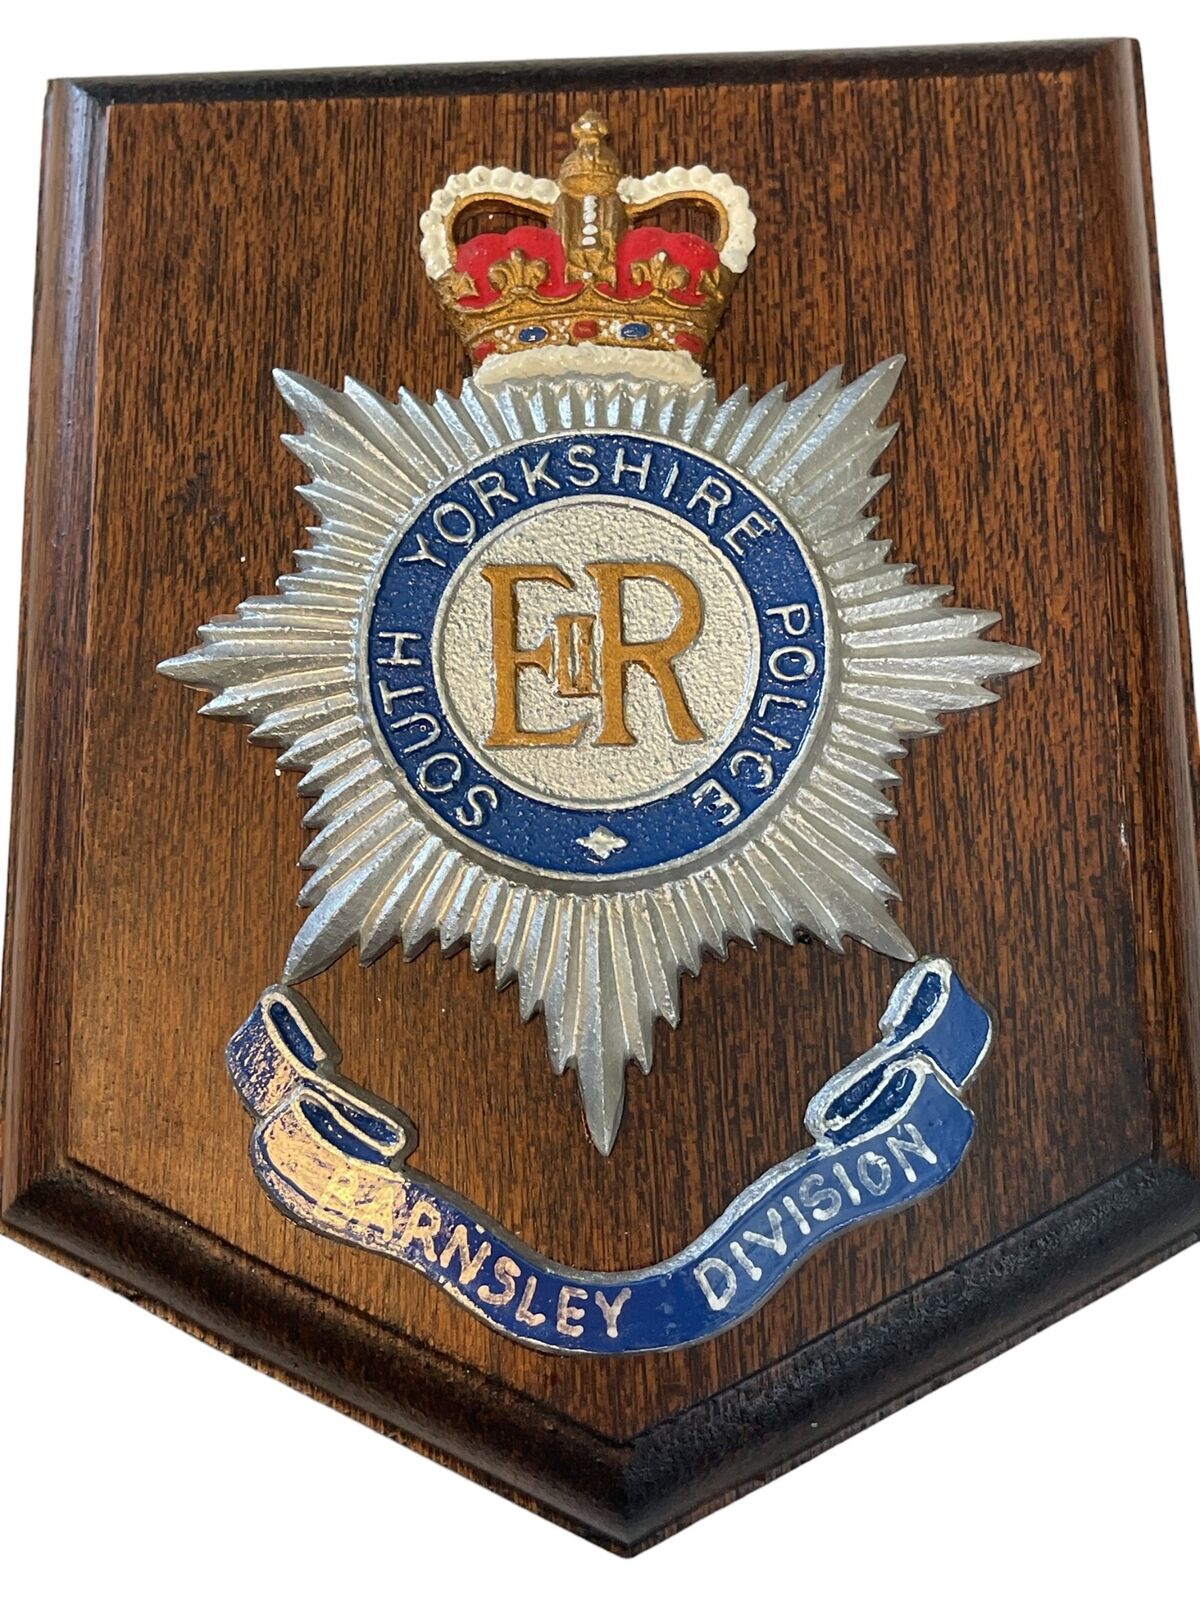 South Yorkshire Police Barnsley Division Crest Badge Wood Plaque UK England